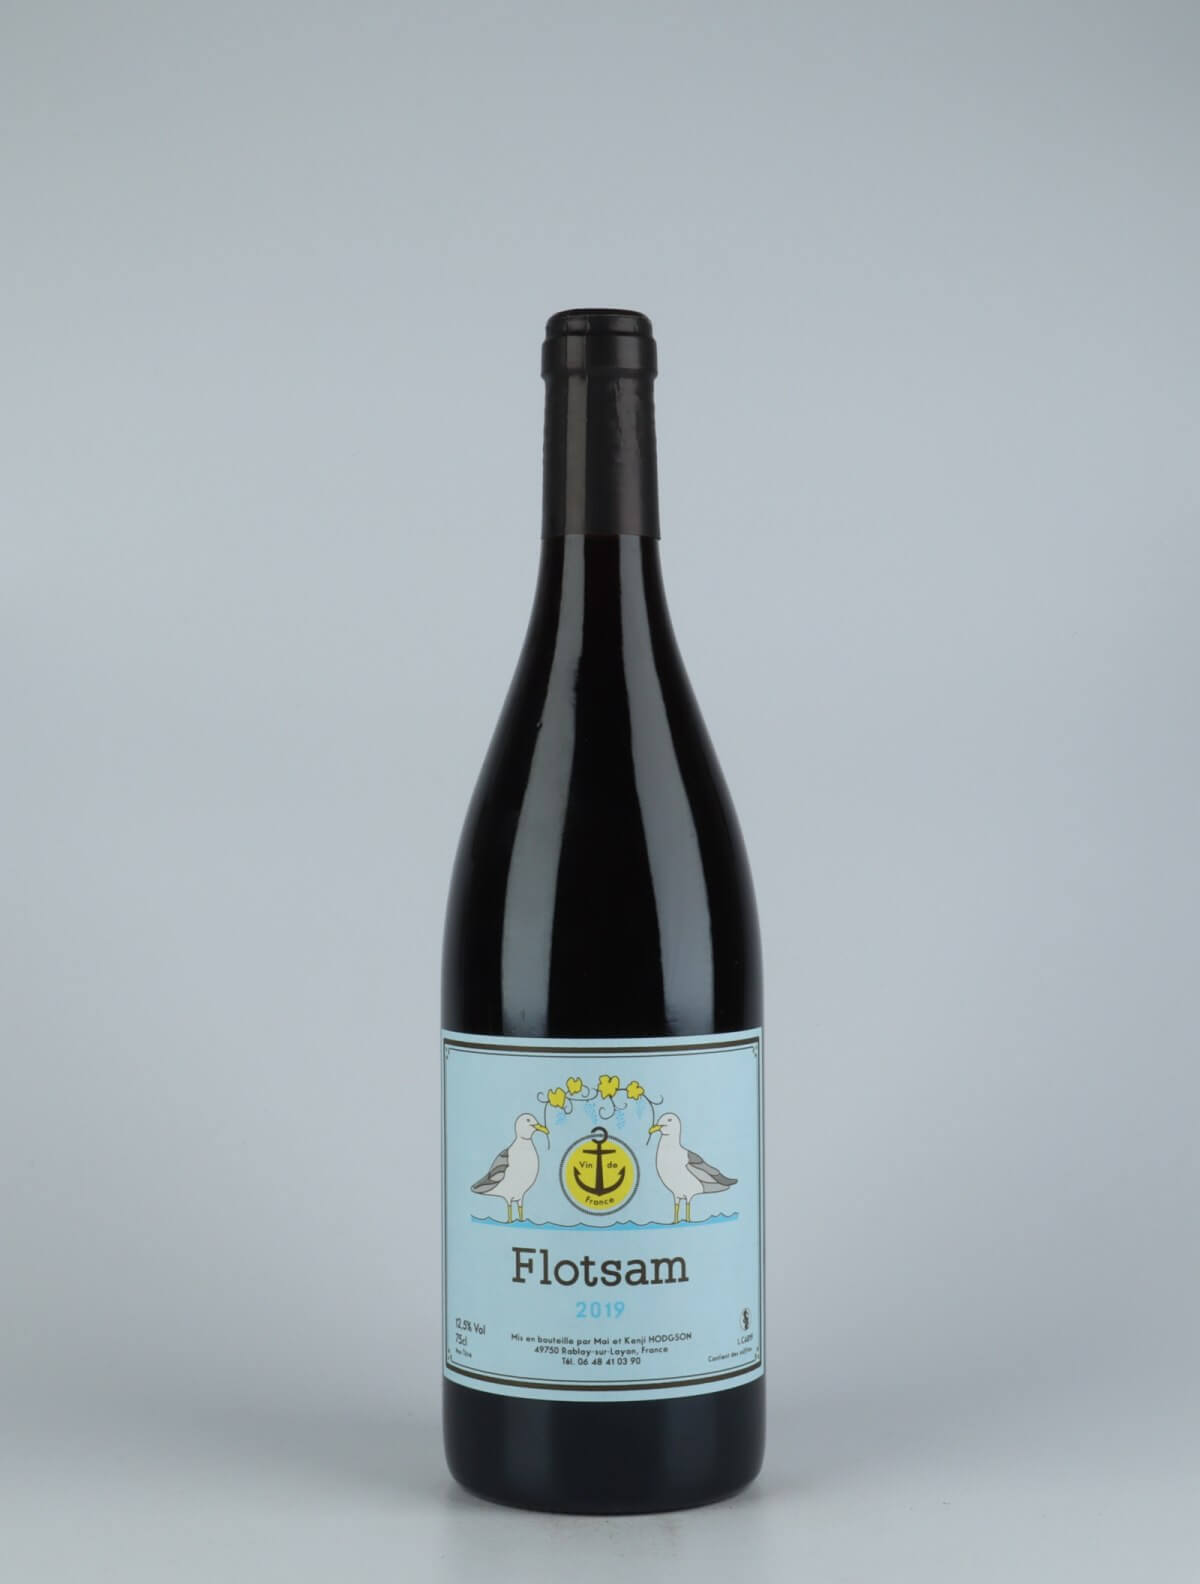 A bottle 2019 Flotsam Red wine from Mai et Kenji Hodgson, Loire in France